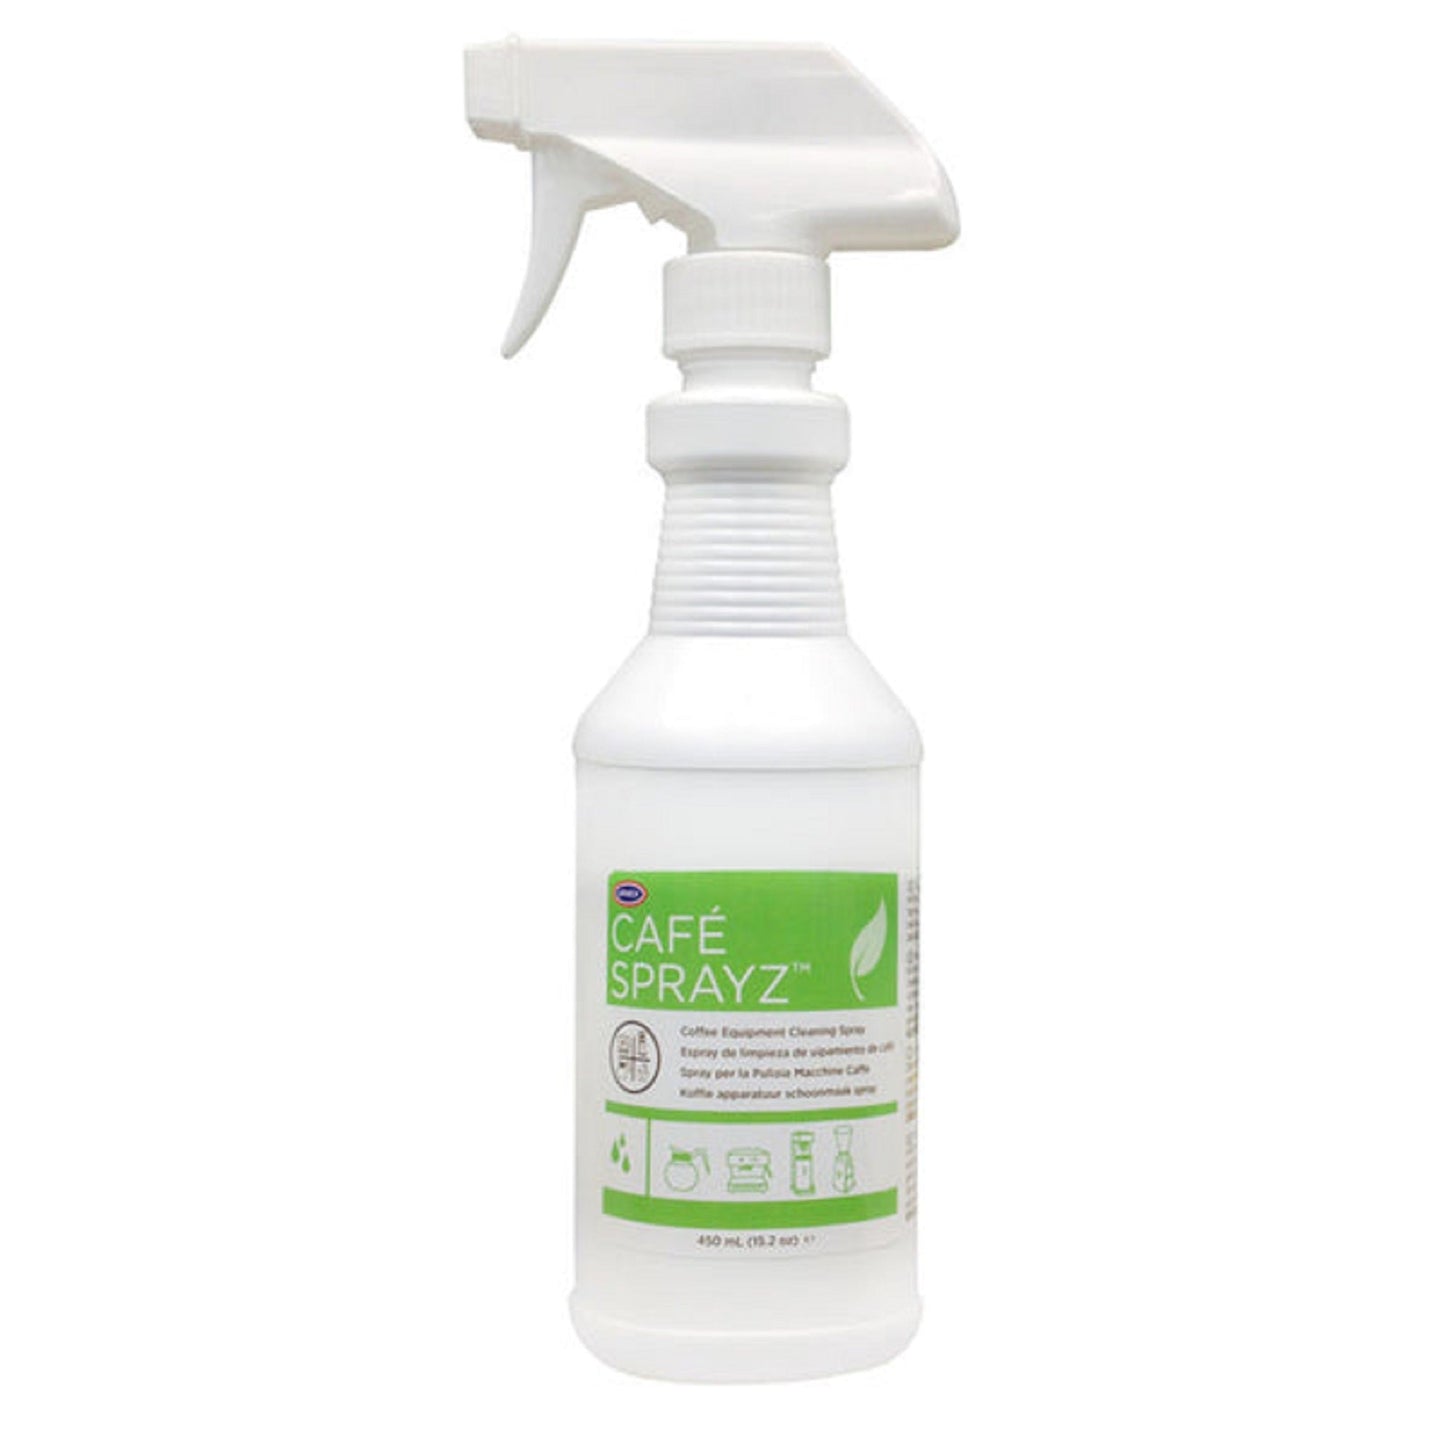 Café Sprayz  -- Coffee Equipment Cleaning Spray 450ml - White Spray Bottle with green label  Velo Coffee Roasters